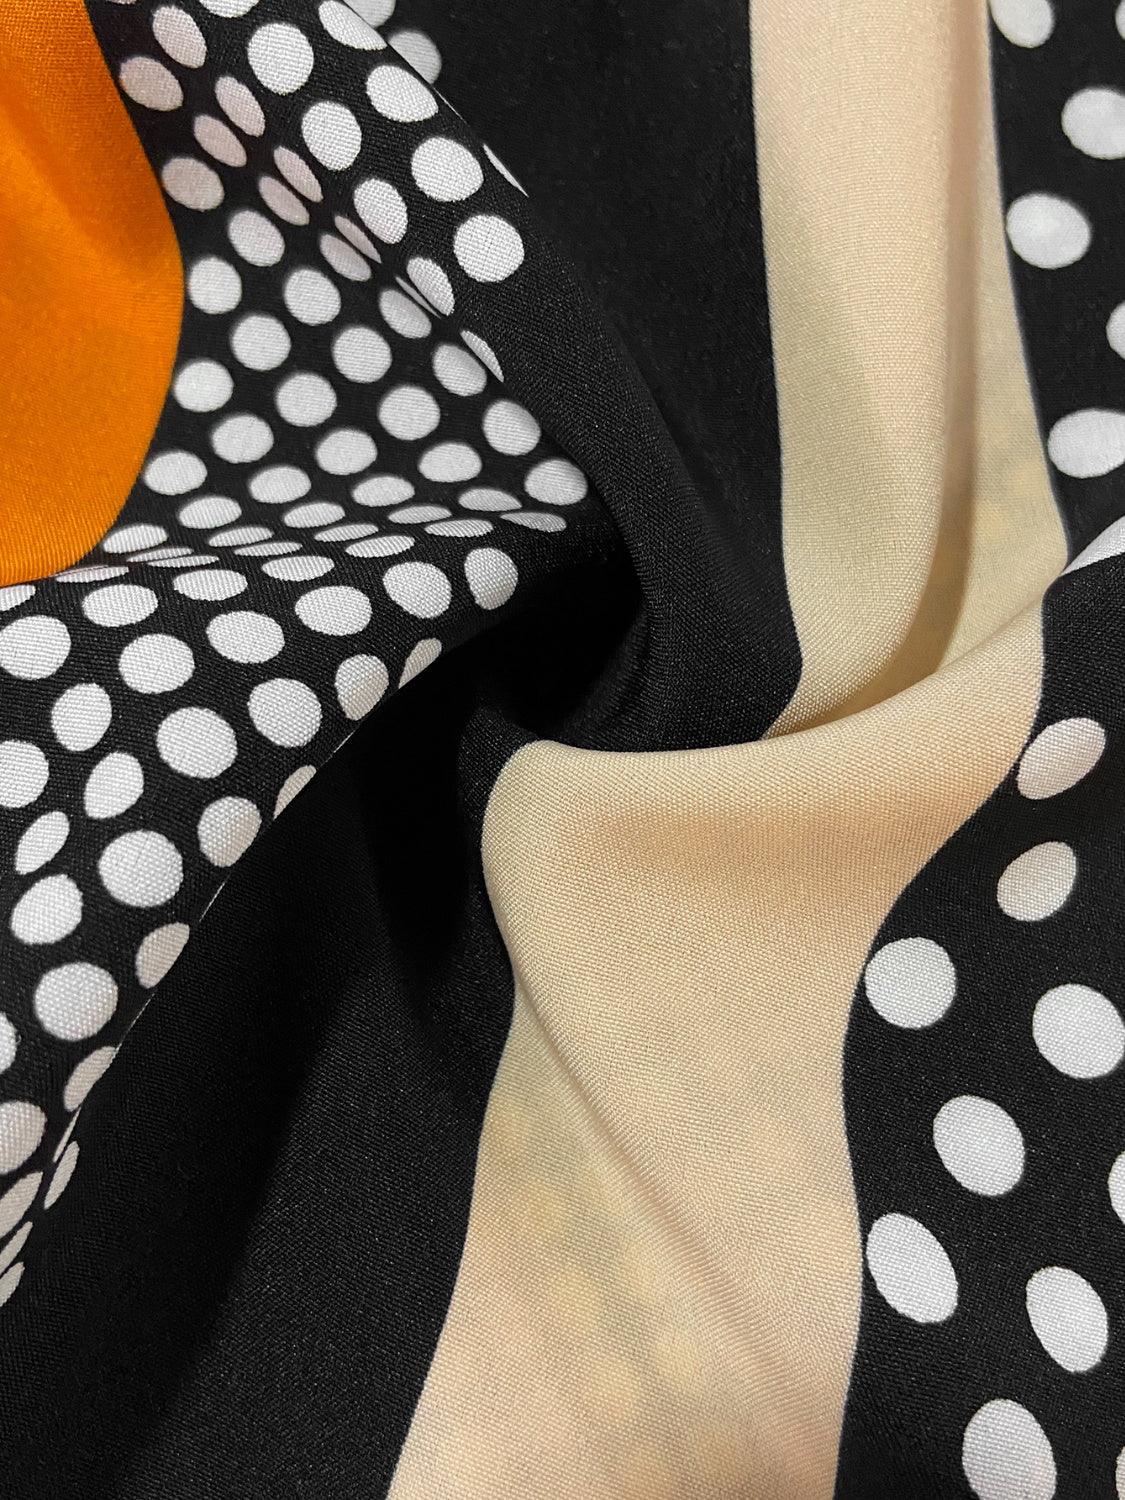 a black and white polka dot print fabric